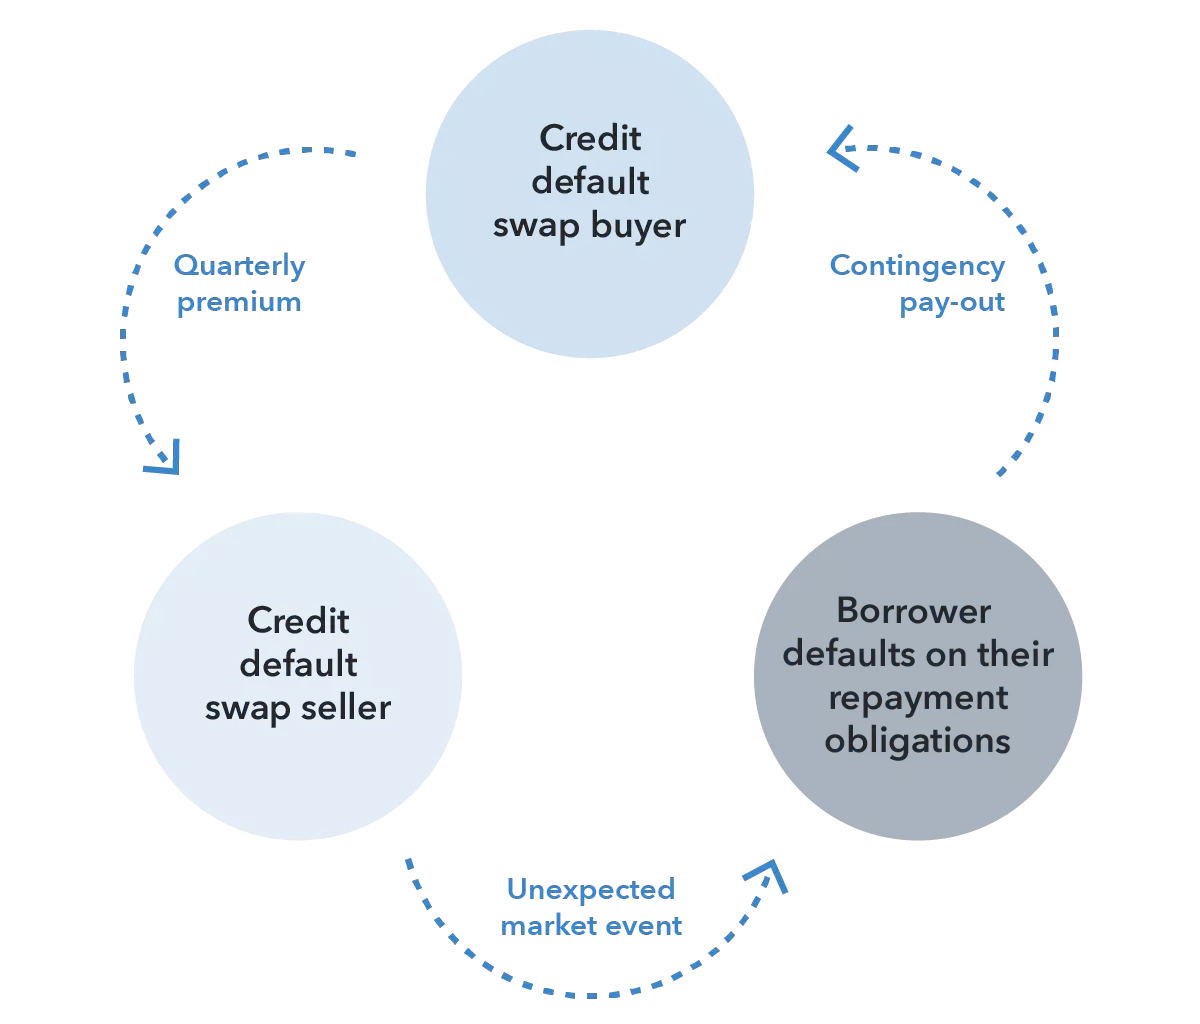 Credit default swap